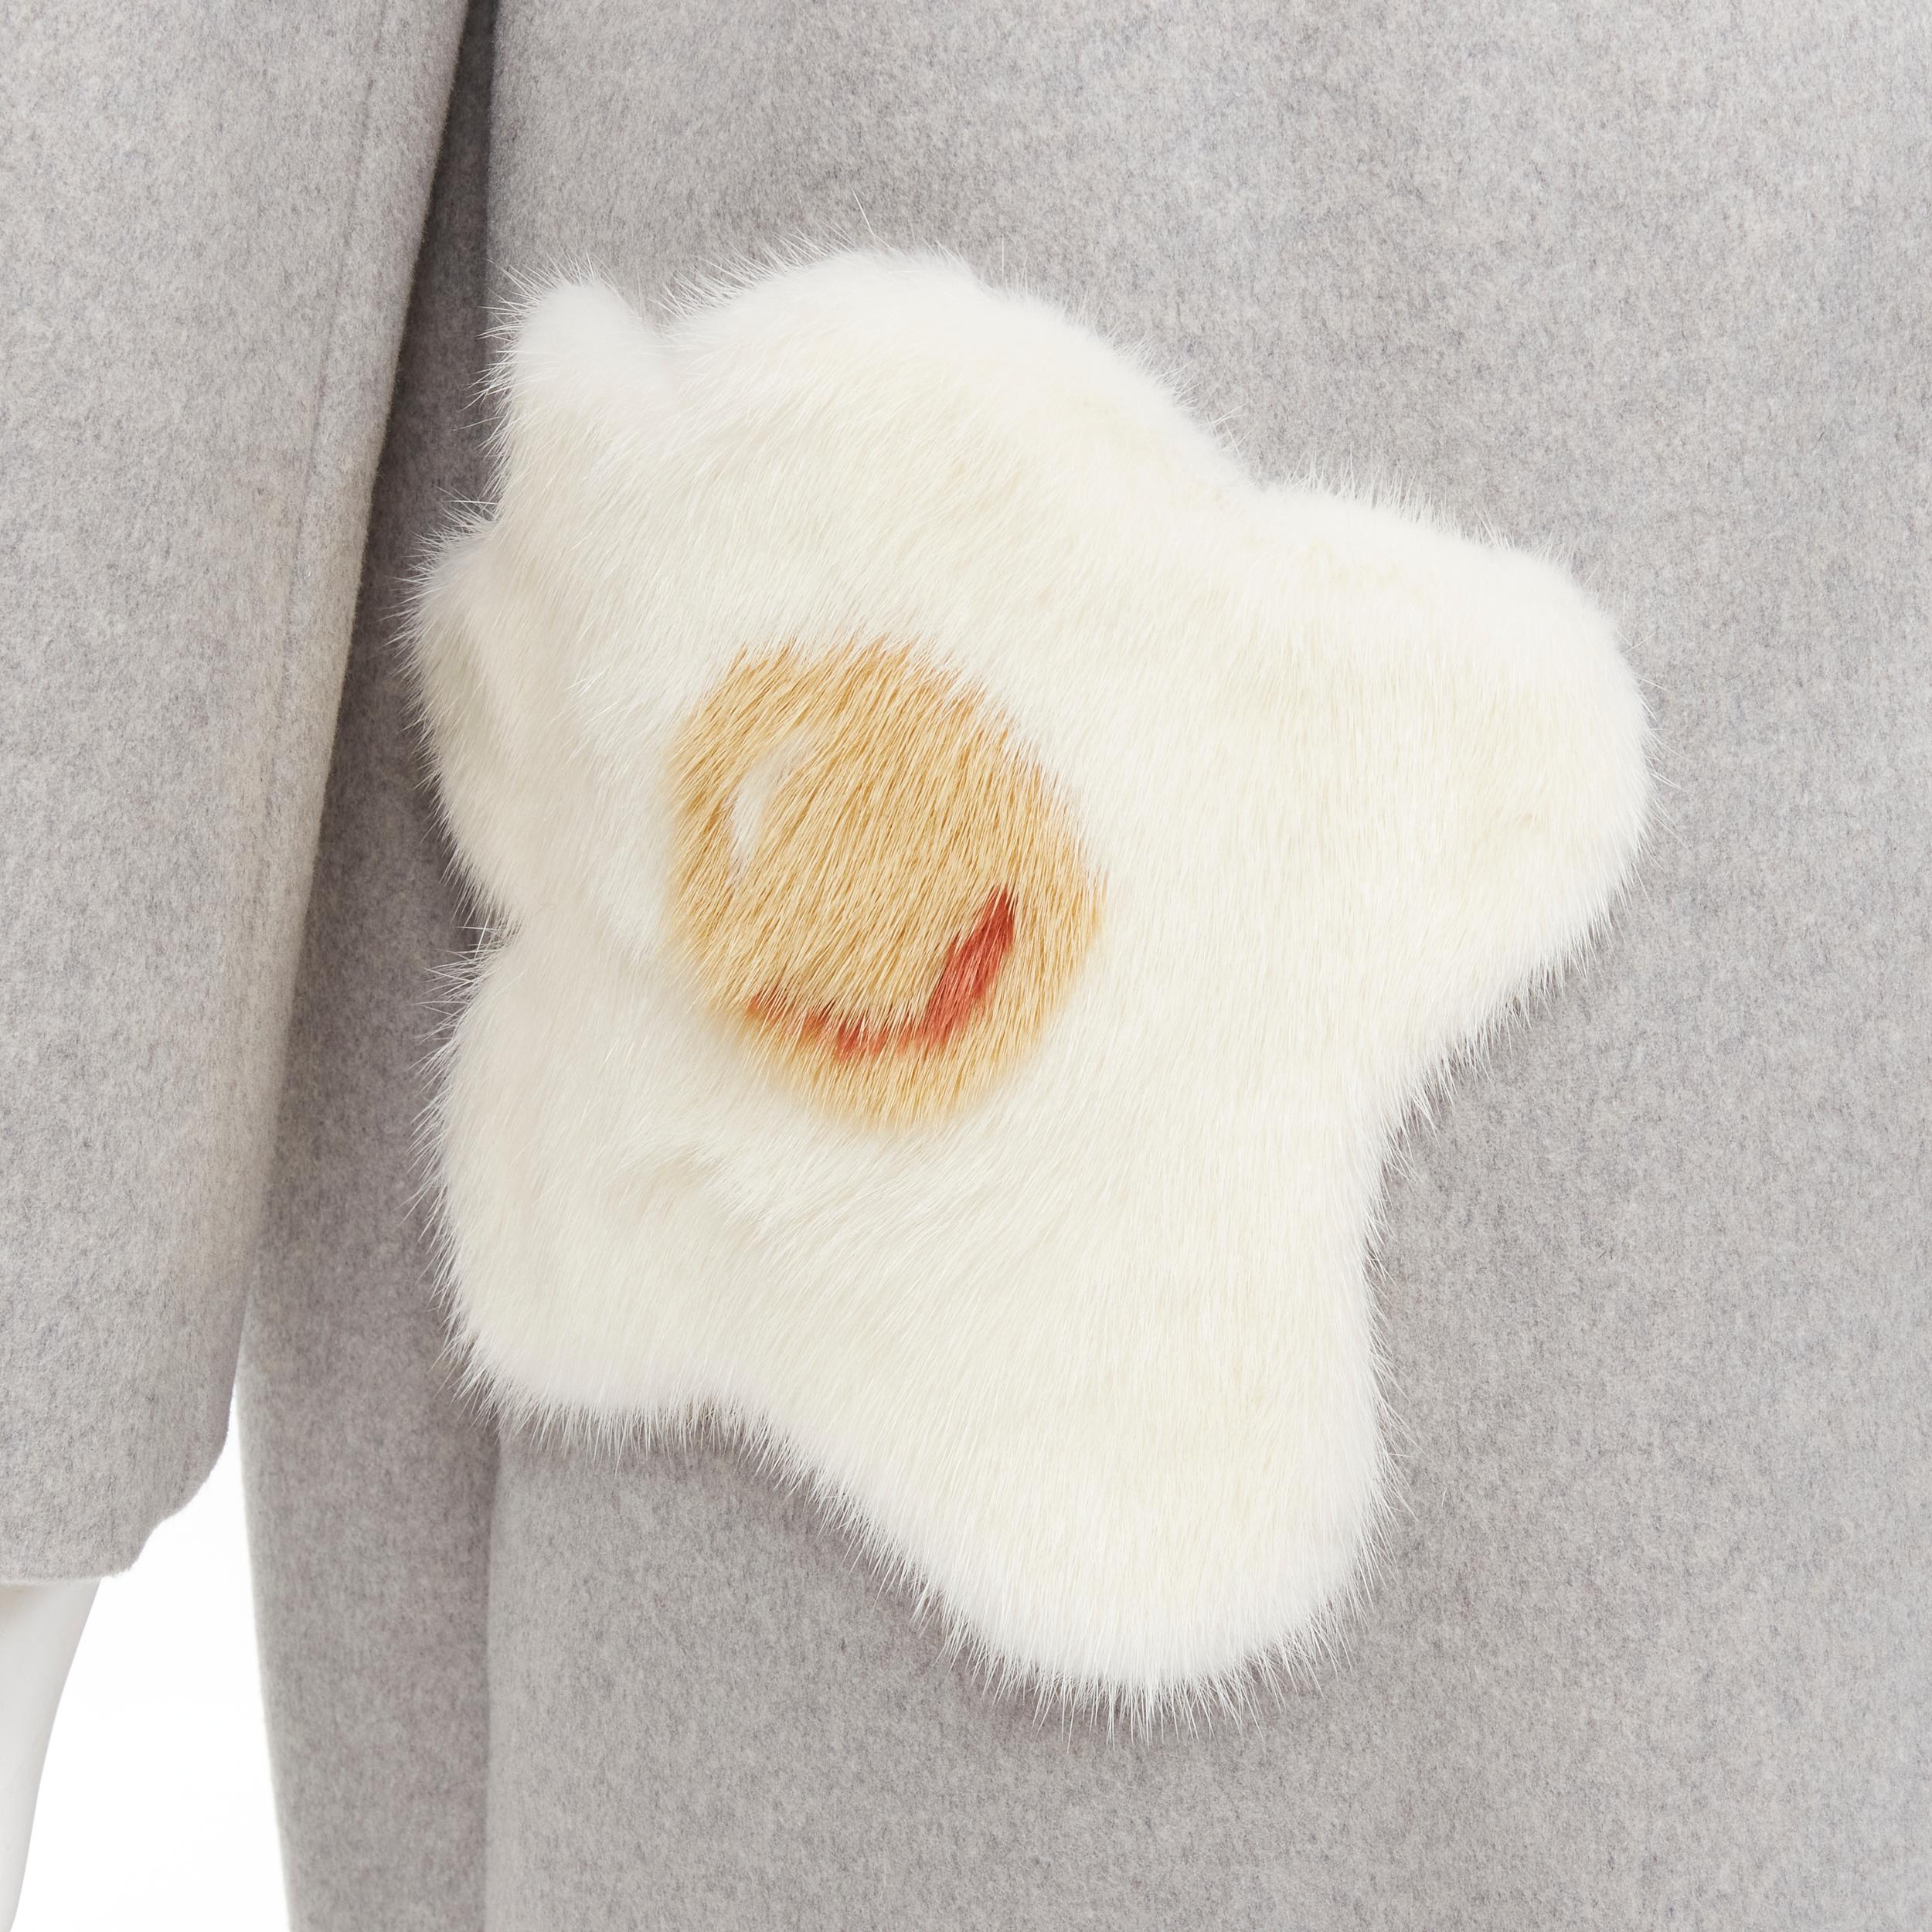 ANYA HINDMARCH 2016 Runway grey virgin wool mink fur scramble egg patch coat XS Reference: LNKO/A01844 
Brand: Anya Hindmarch 
Designer: Anya Hindmarch 
Collection: 2016 Runway 
Material: Wool 
Color: Grey Pattern: 
Solid Closure: Hook & Bar 
Extra